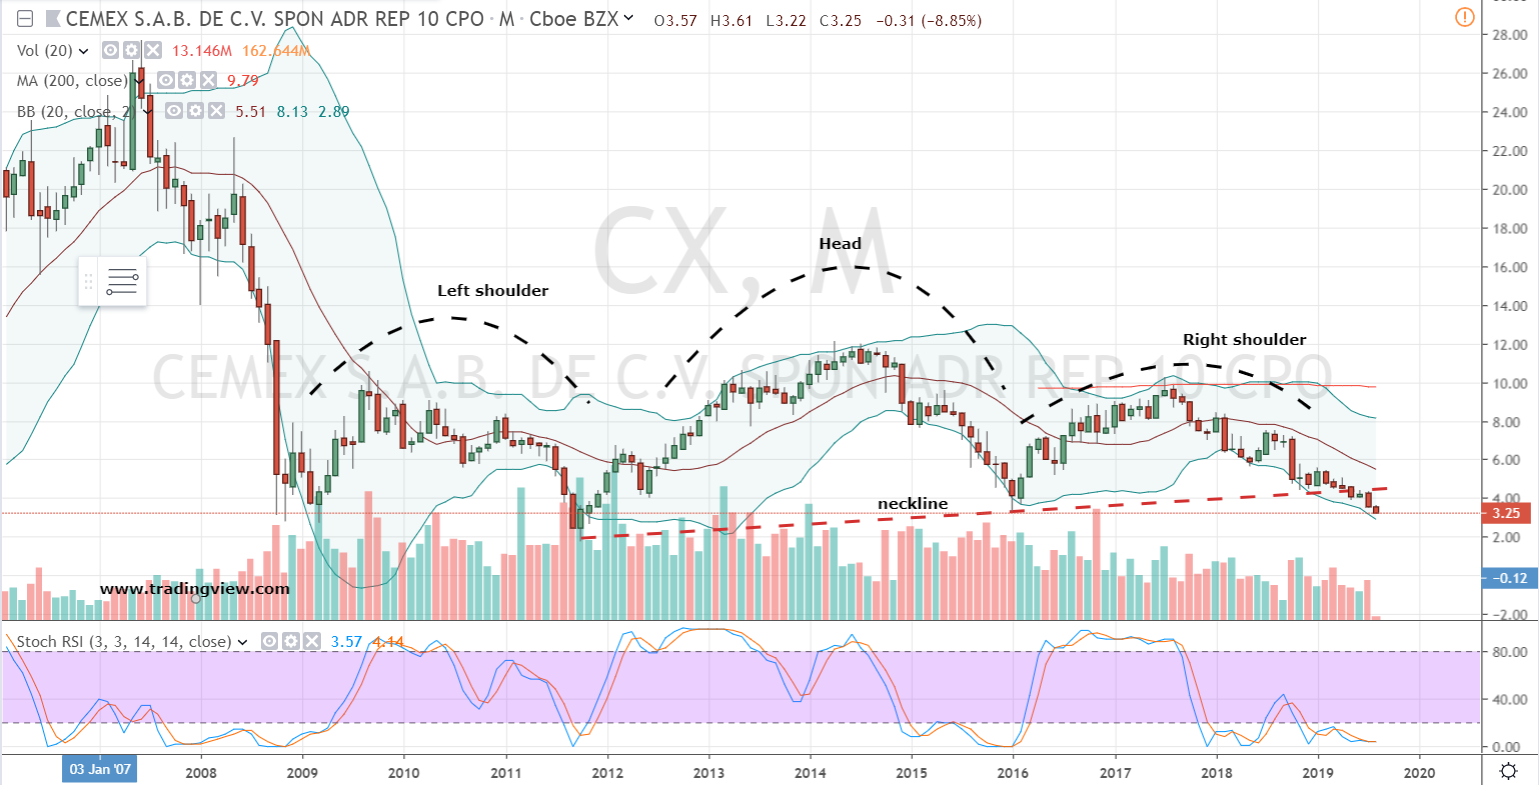 Infrastructure Stocks: Cemex (CX)